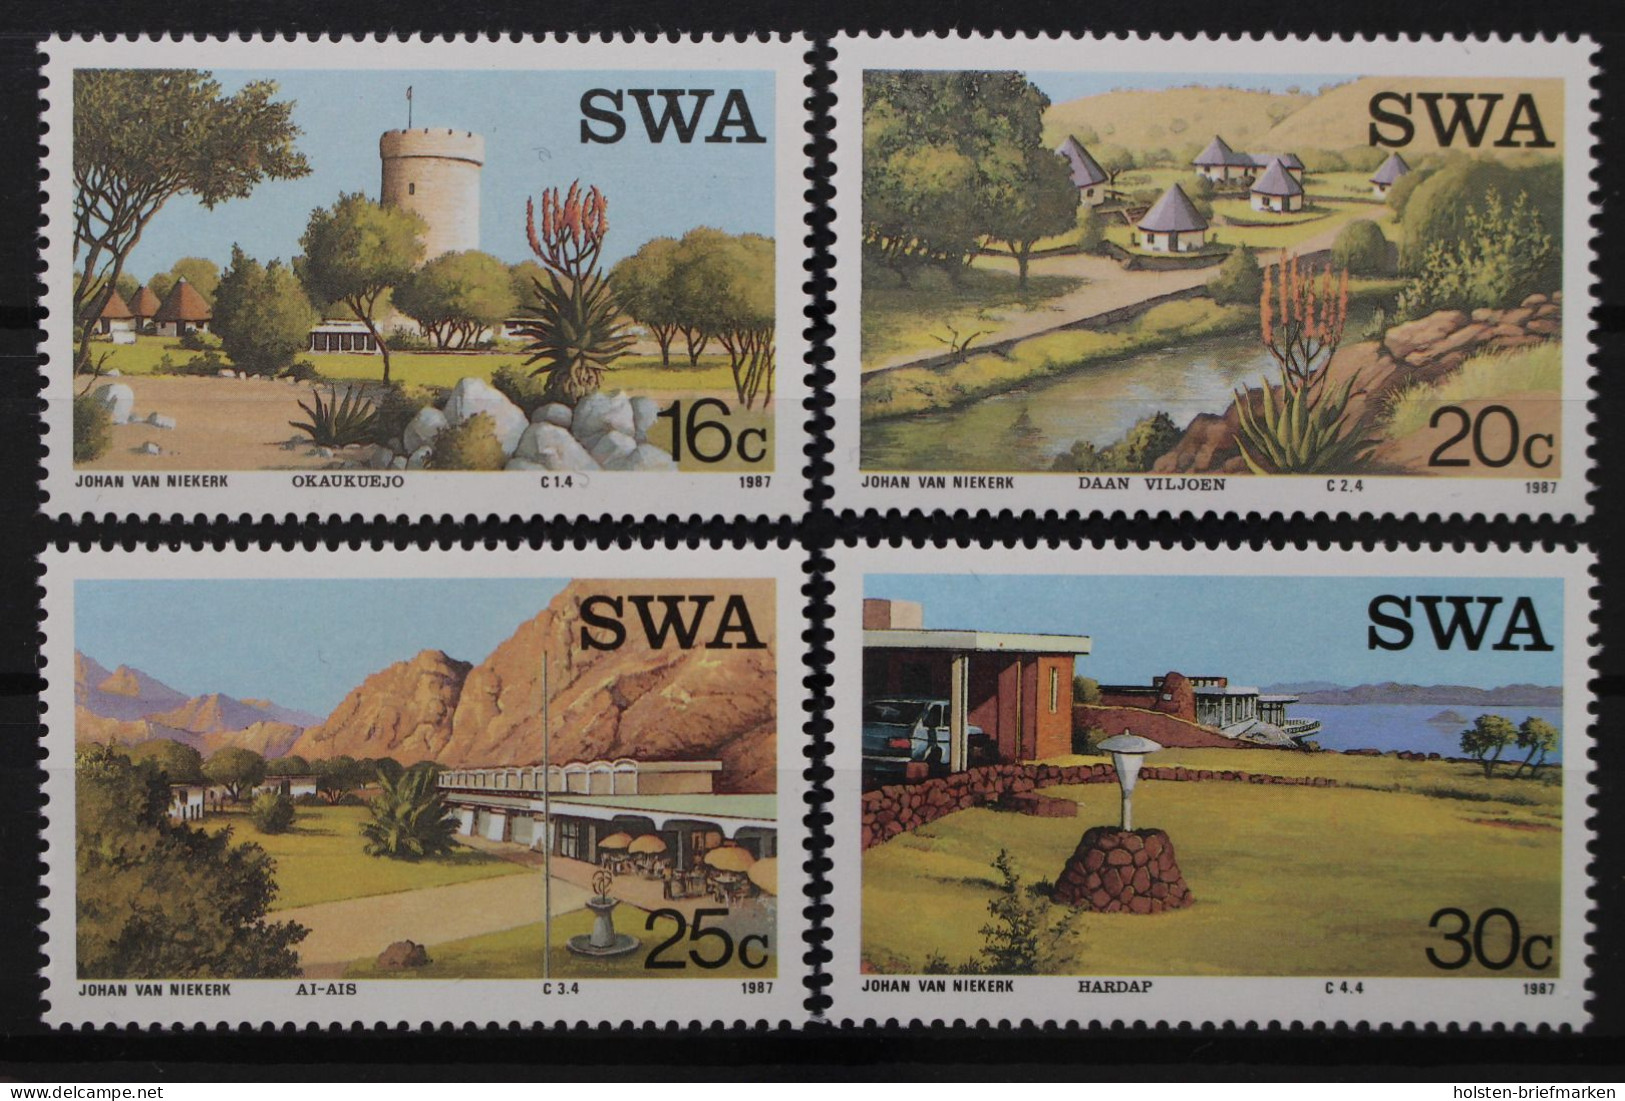 Namibia - Südwestafrika, MiNr. 609-612, Postfrisch - Namibie (1990- ...)